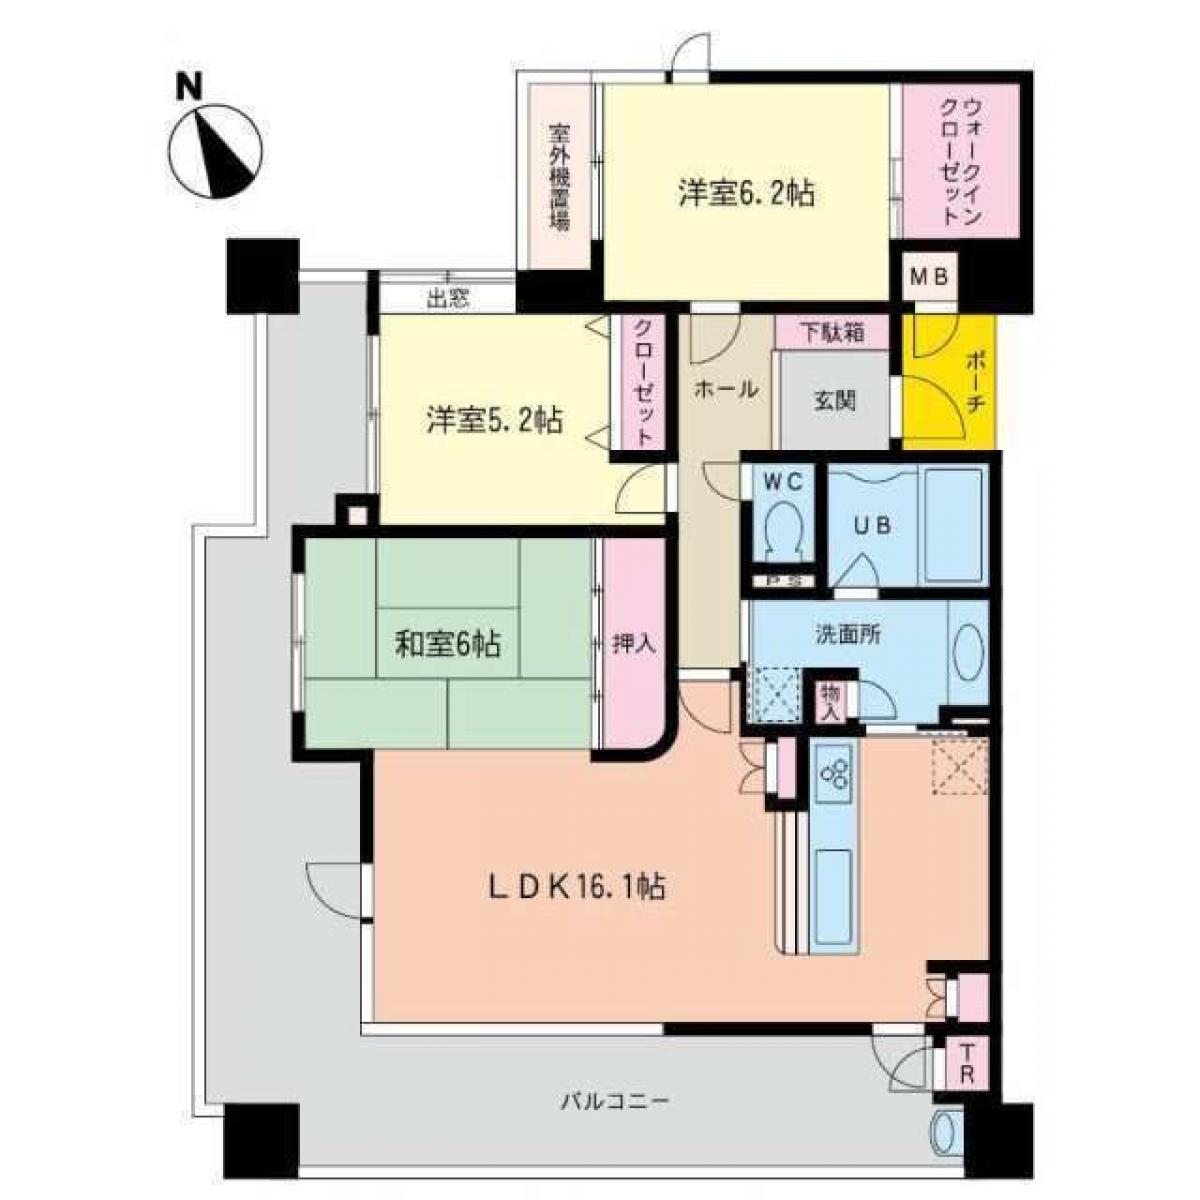 Picture of Apartment For Sale in Kitakyushu Shi Moji Ku, Fukuoka, Japan